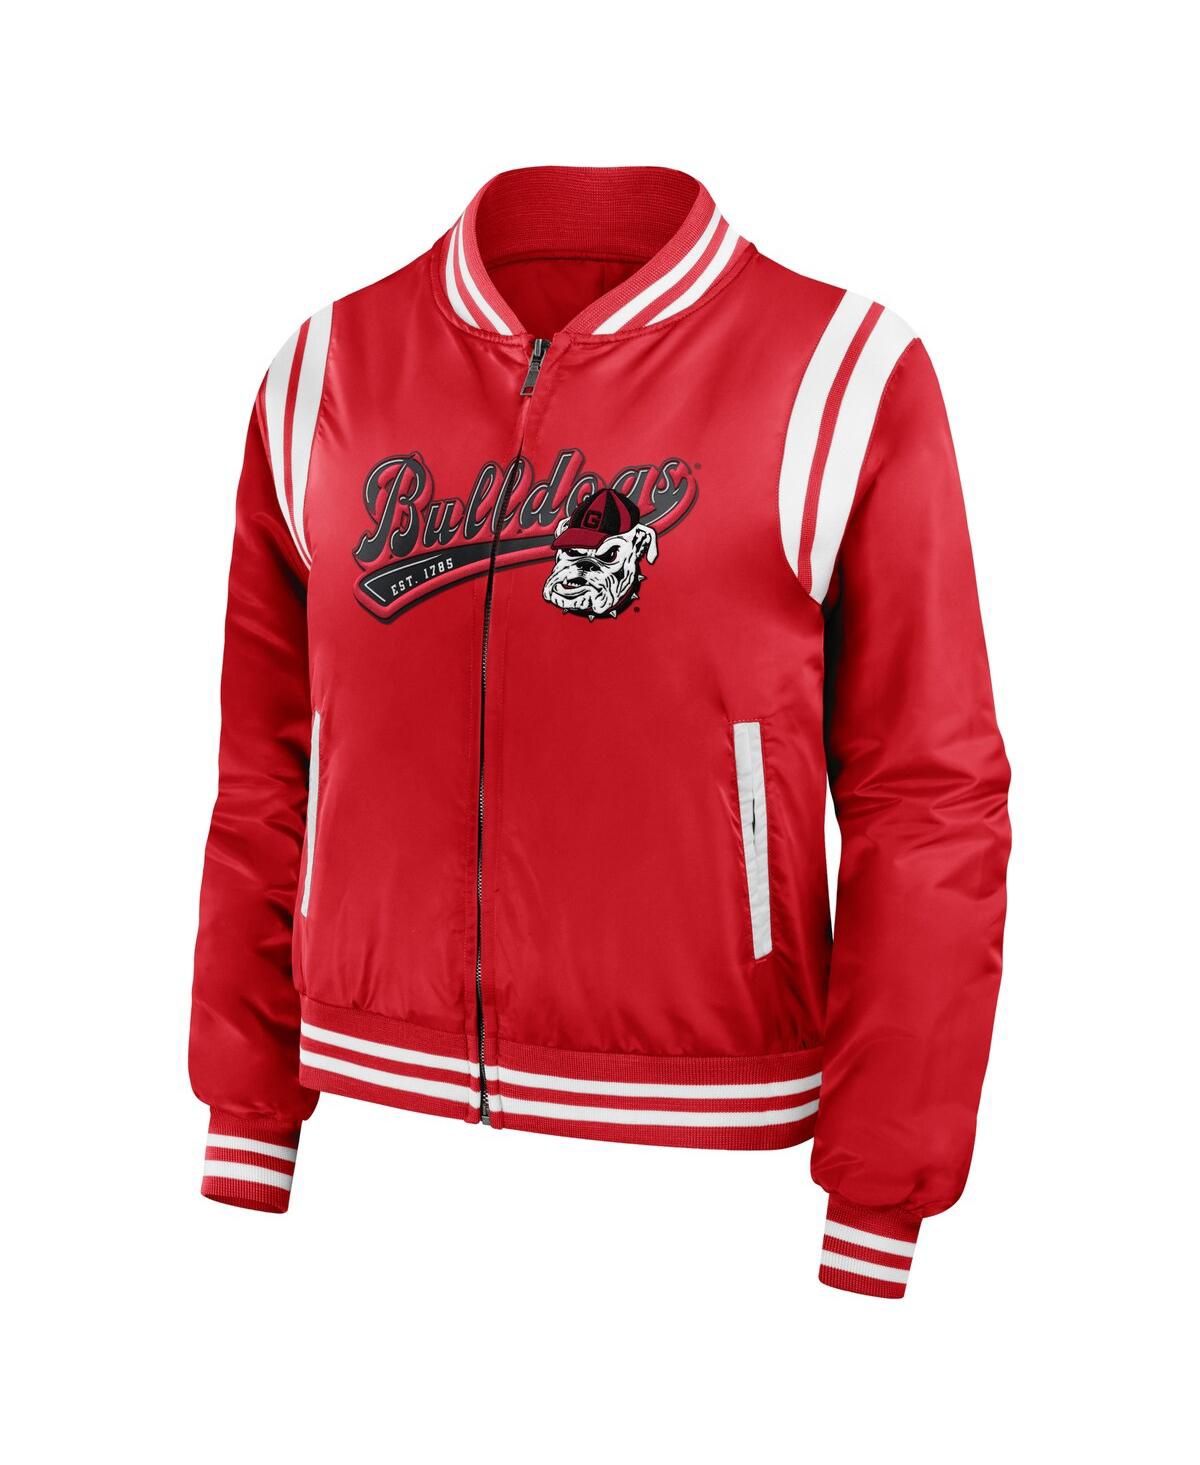 Shop Wear By Erin Andrews Women's  Red Georgia Bulldogs Football Bomber Full-zip Jacket